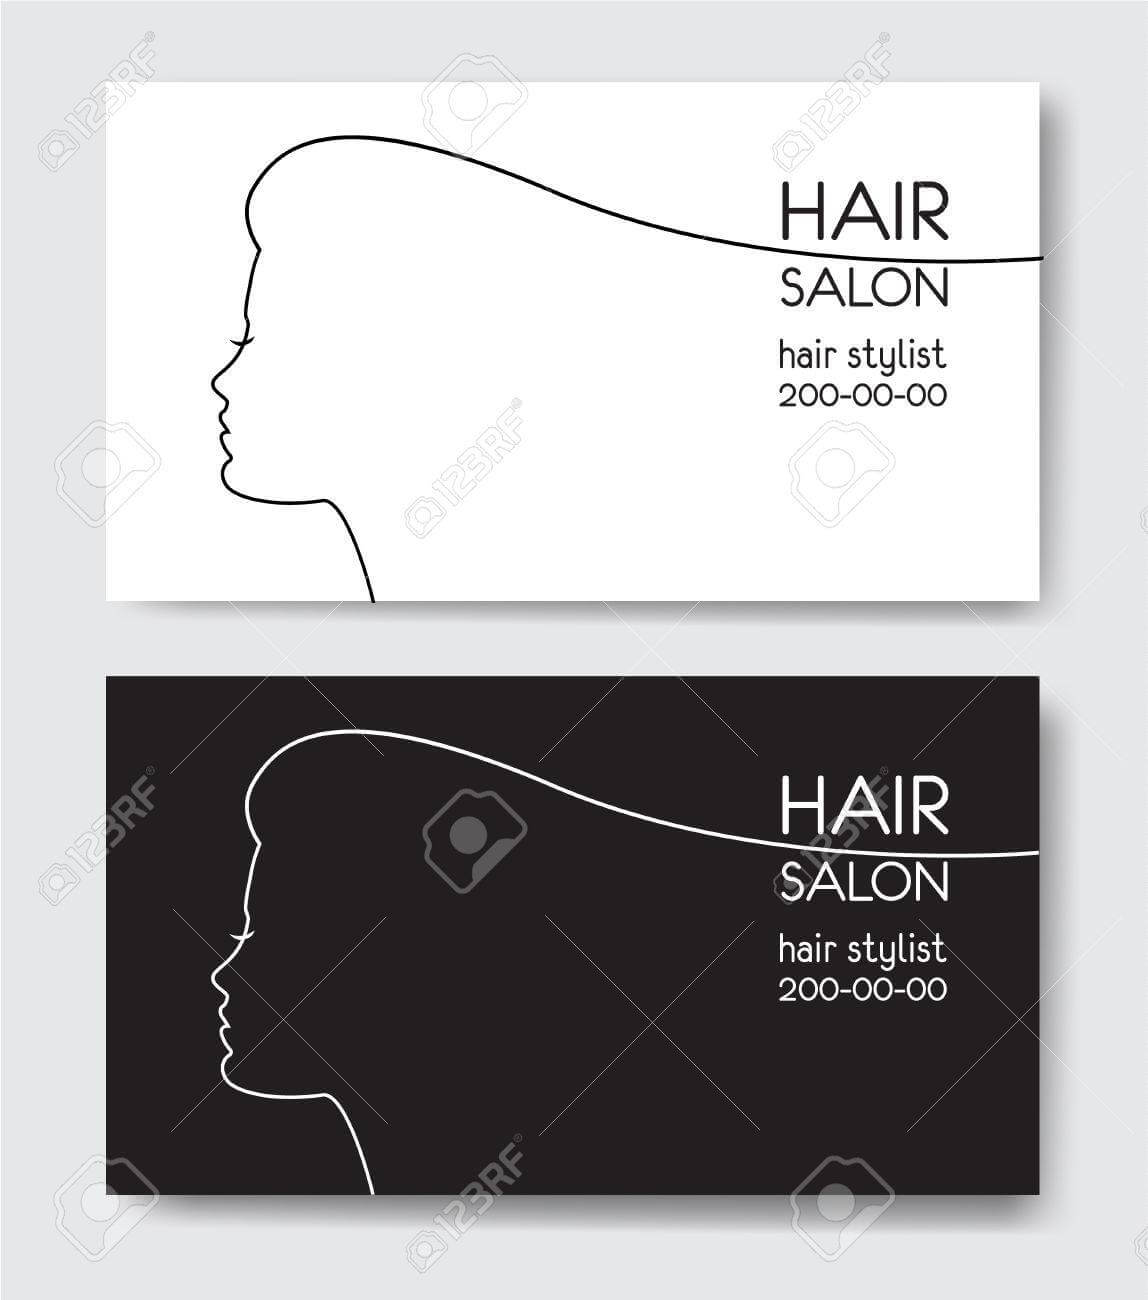 Hair Salon Business Card Templates. Intended For Hair Salon Business Card Template